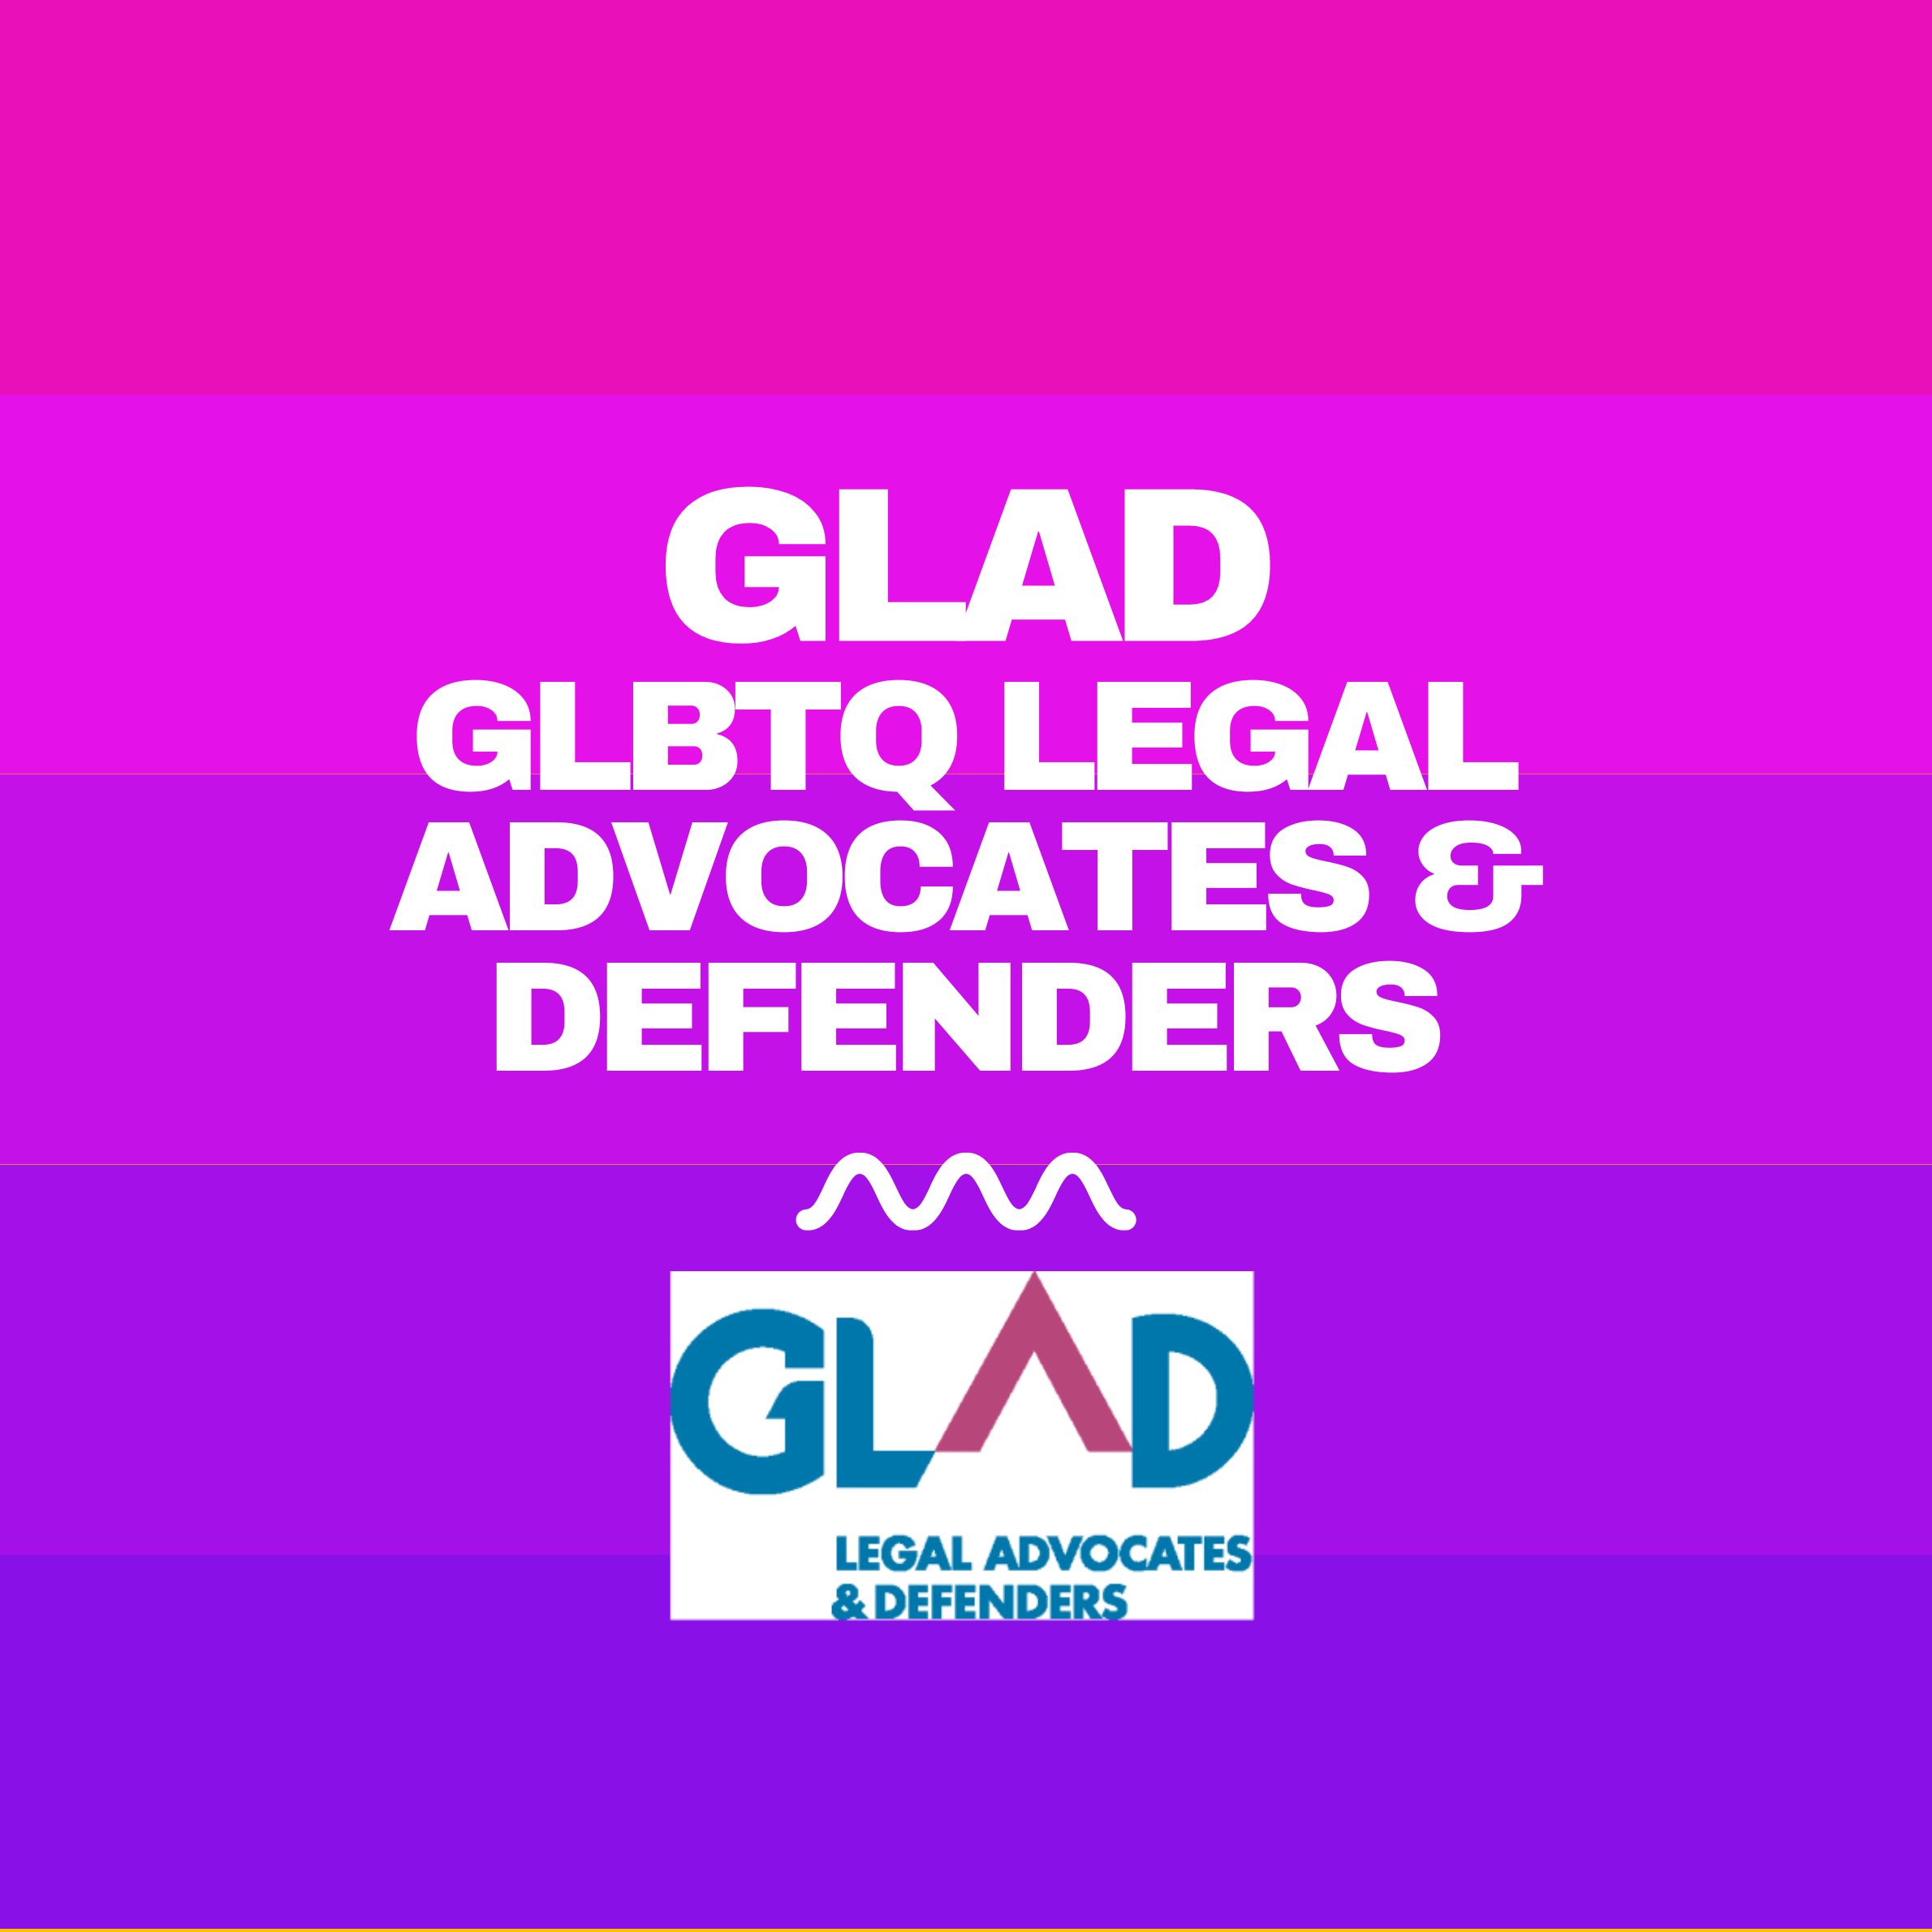 GLAD - GLBTQ Legal Advocates and Defenders